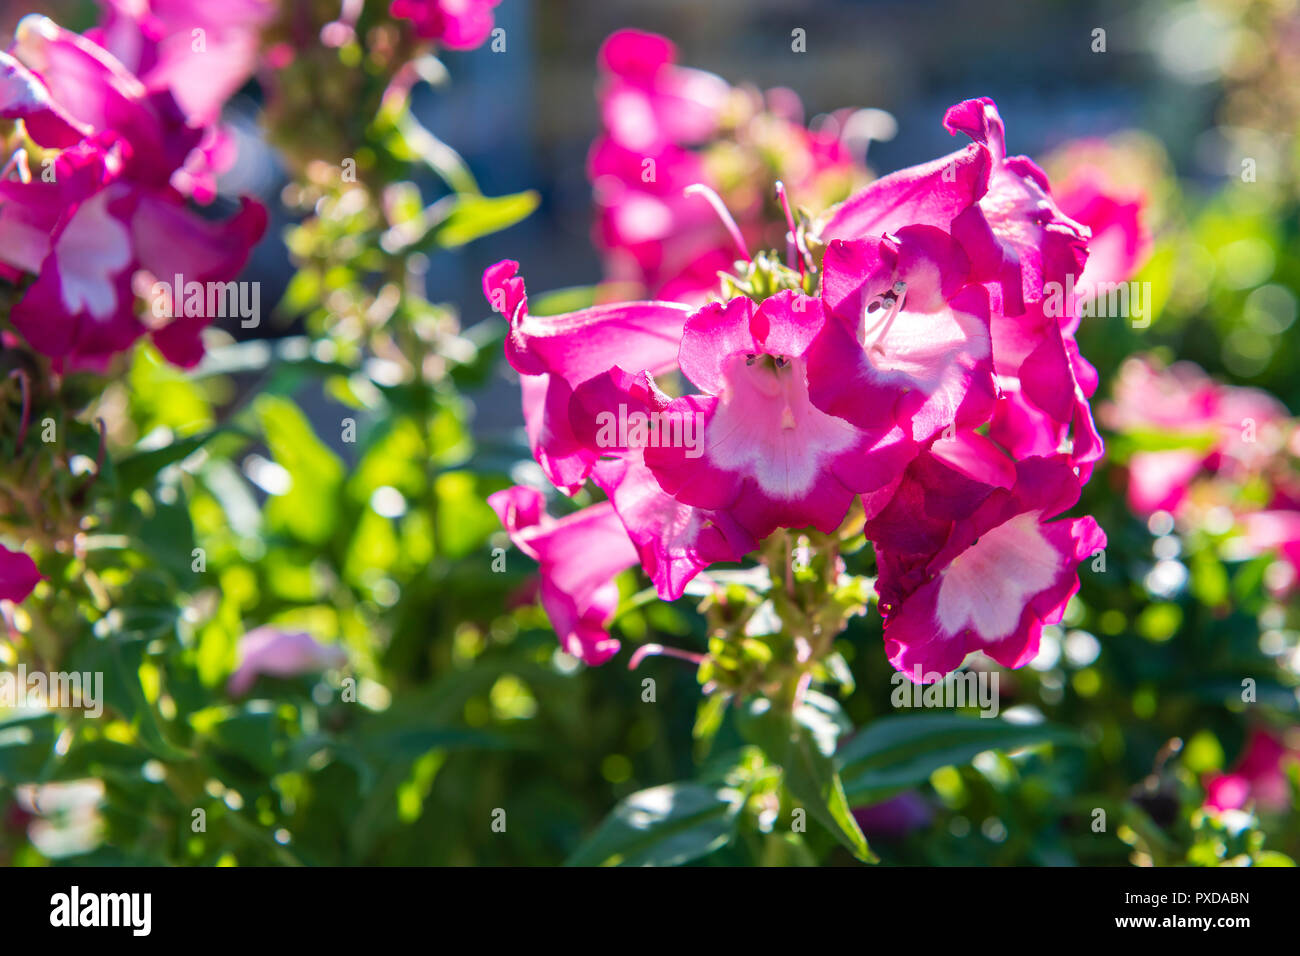 Penstemon 'Pentastic pink' garden plant, UK. Stock Photo